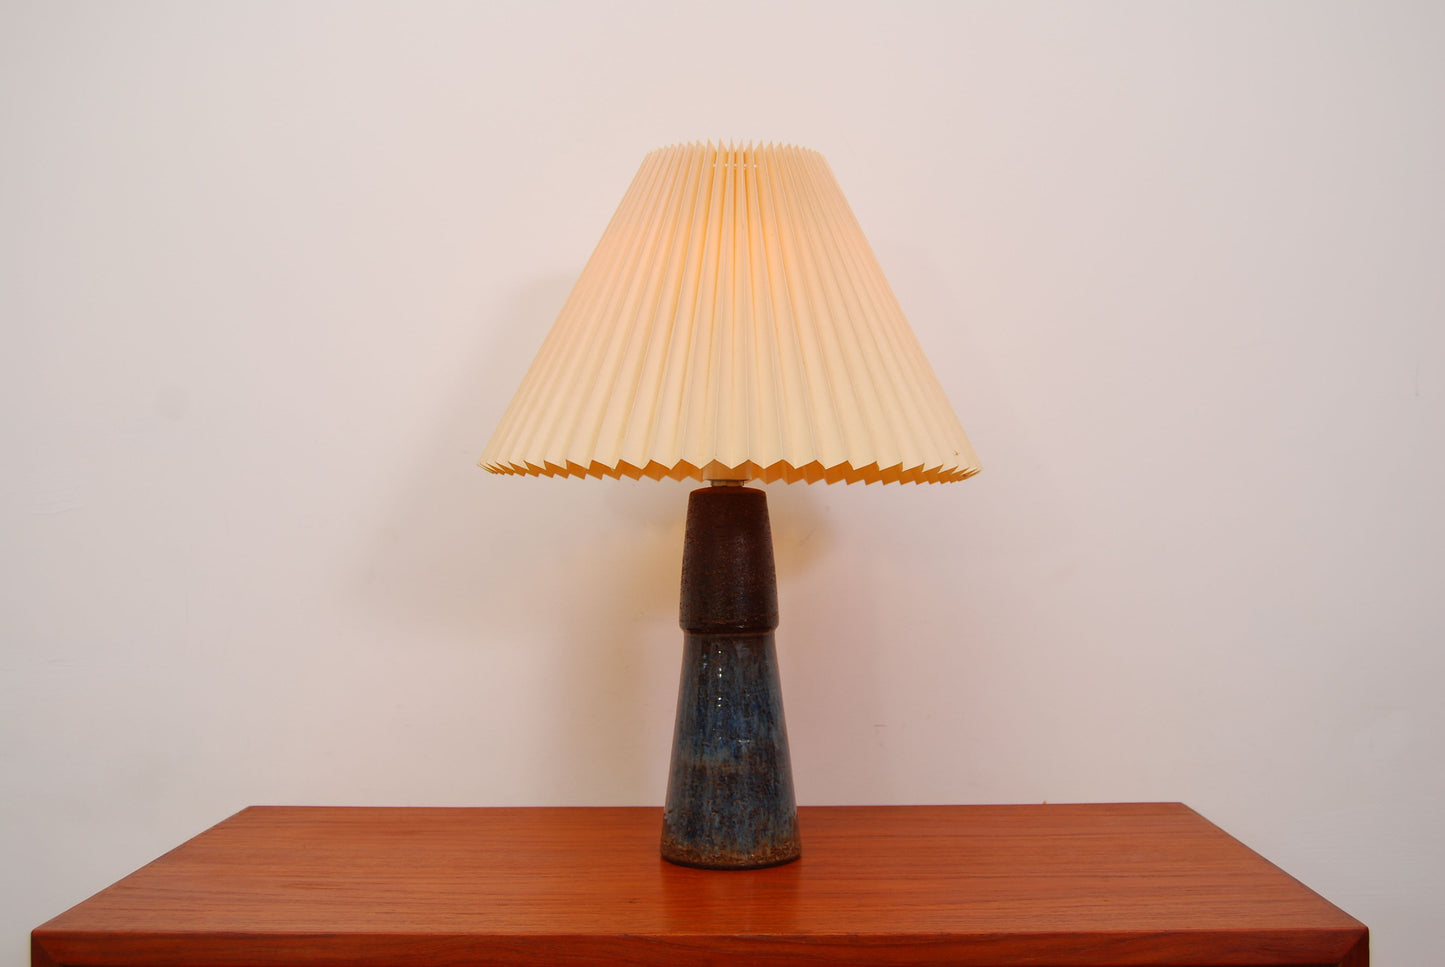 Ceramic table lamp by Soholm Stentoj